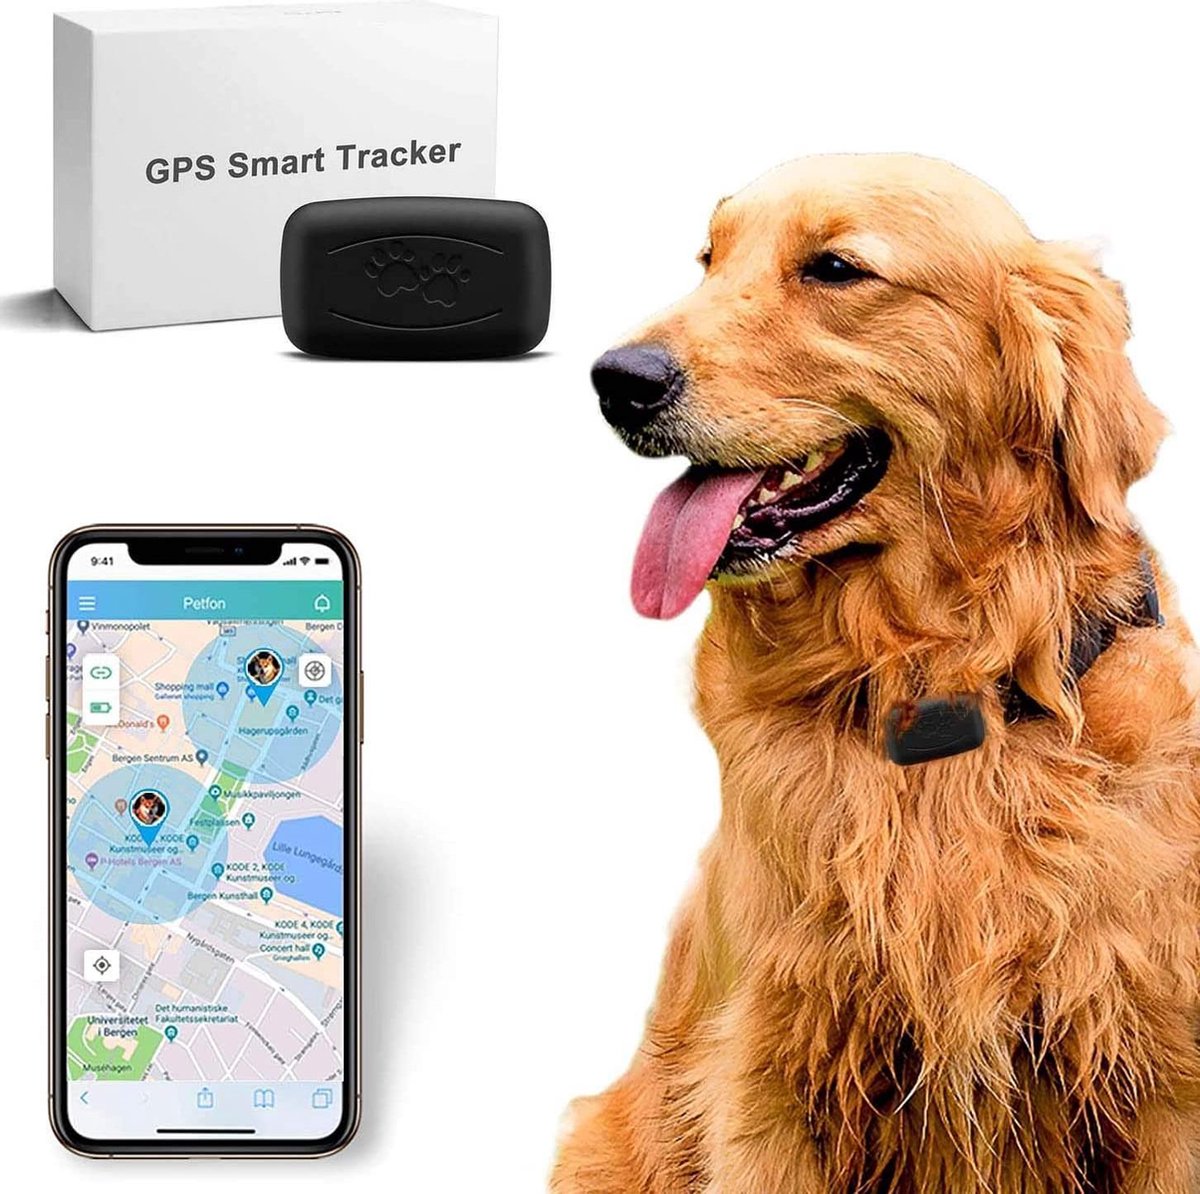 SAMA Direct™ Huisdier GPS Tracker- Zonder abonnement - lange batterijduur - Kat - Hond - Zwart - Waterdicht - Track & Trace Volgsysteem - SAMA Direct